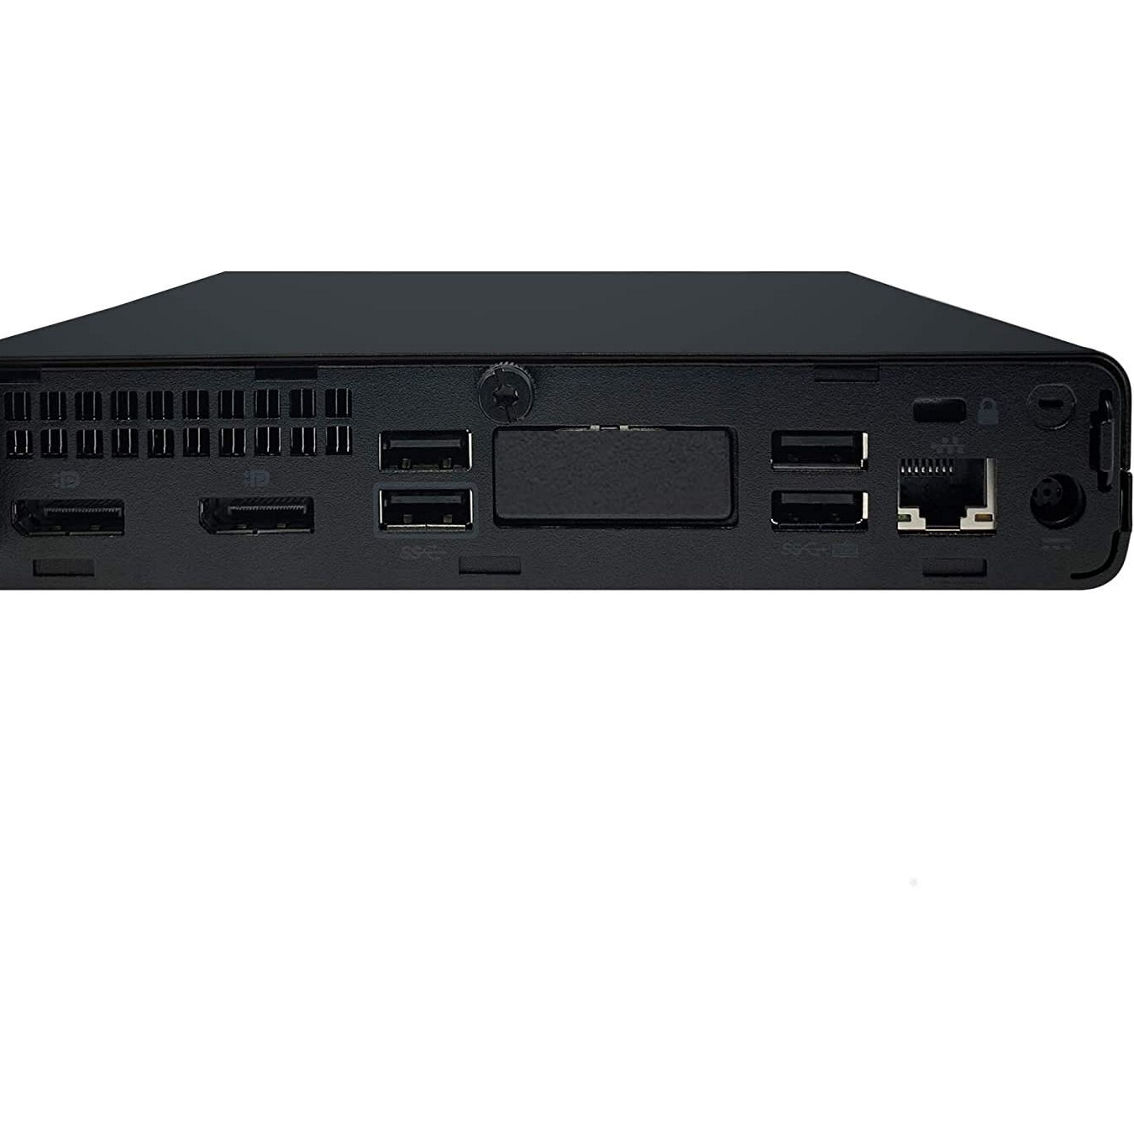 HP 800 G4-MINI Core i5-8500T 2.1GHz 16GB 256GB SSD PC (Refurbished) - Image 3 of 3